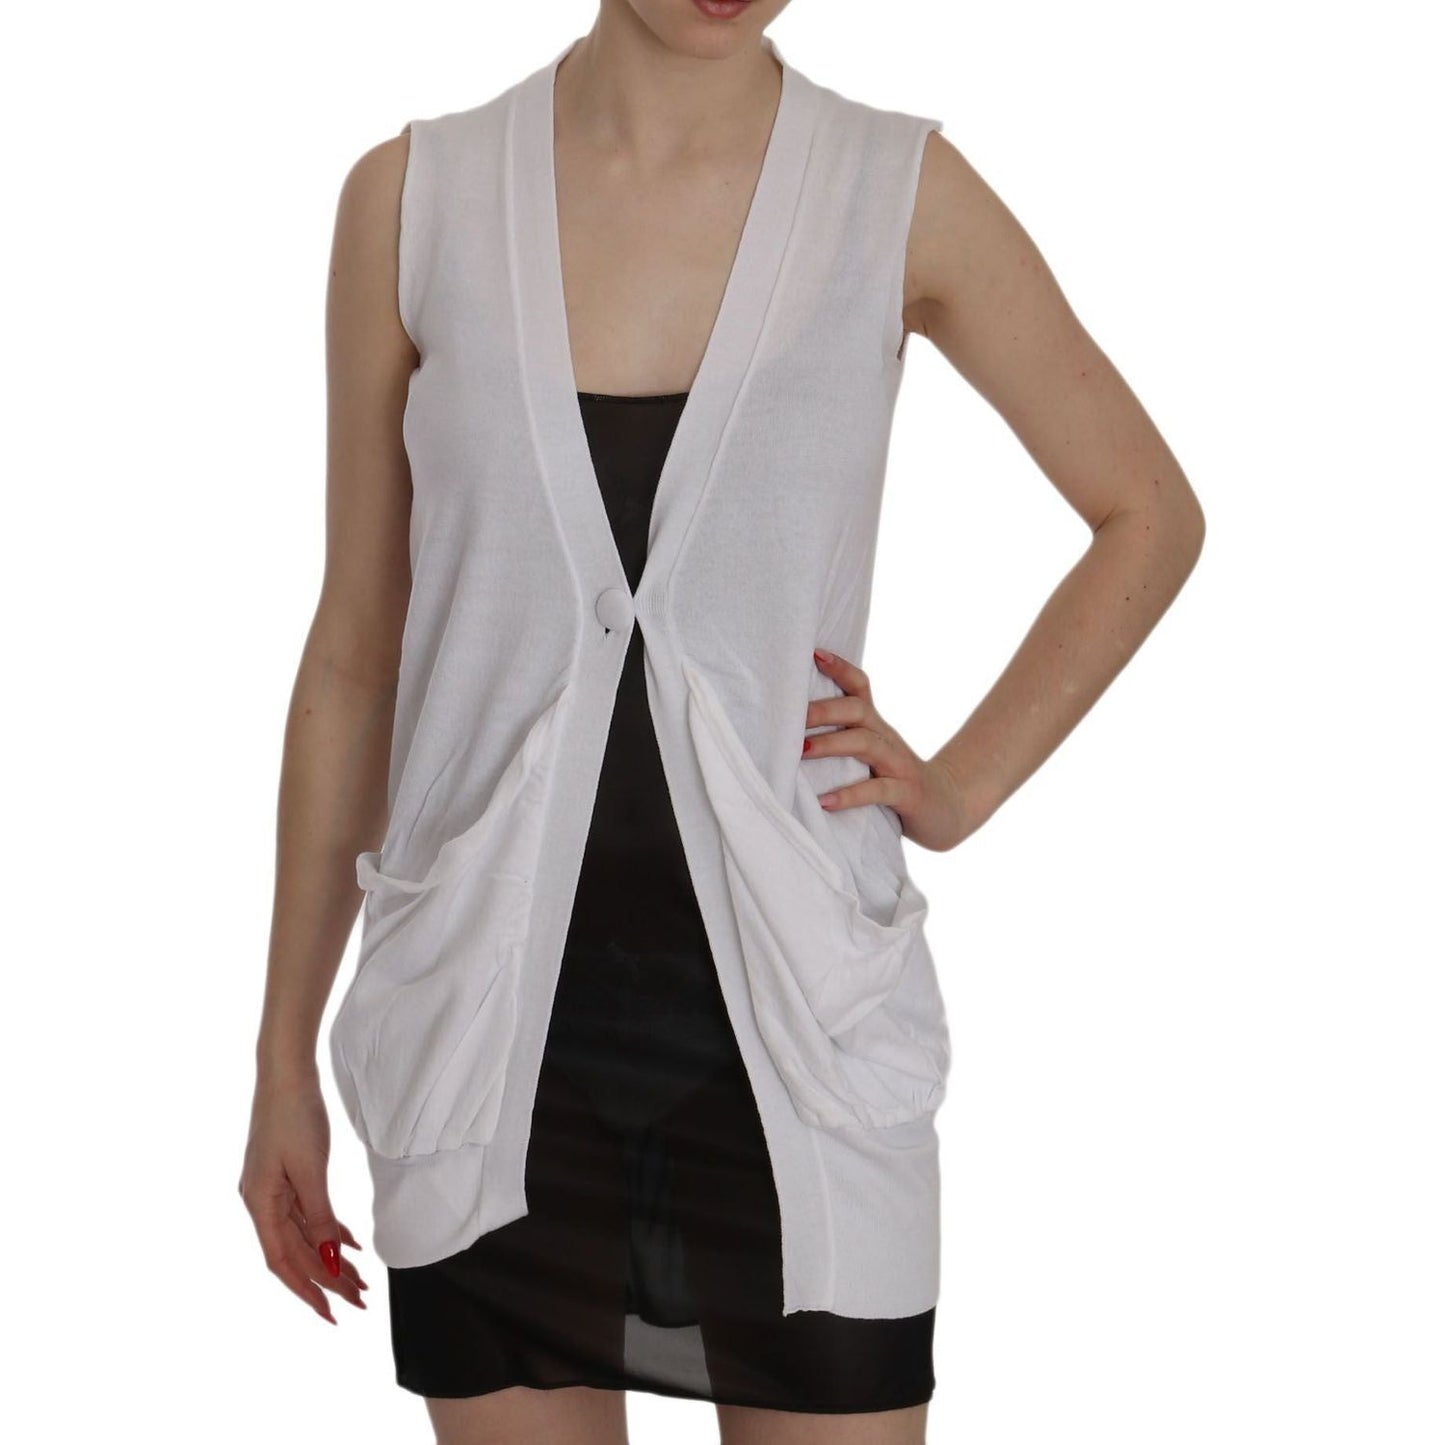 PINK MEMORIES Elegant Sleeveless Cotton Vest in Pristine White white-100-cotton-sleeveless-cardigan-top-vest IMG_1915-f3eb0790-c3d.jpg